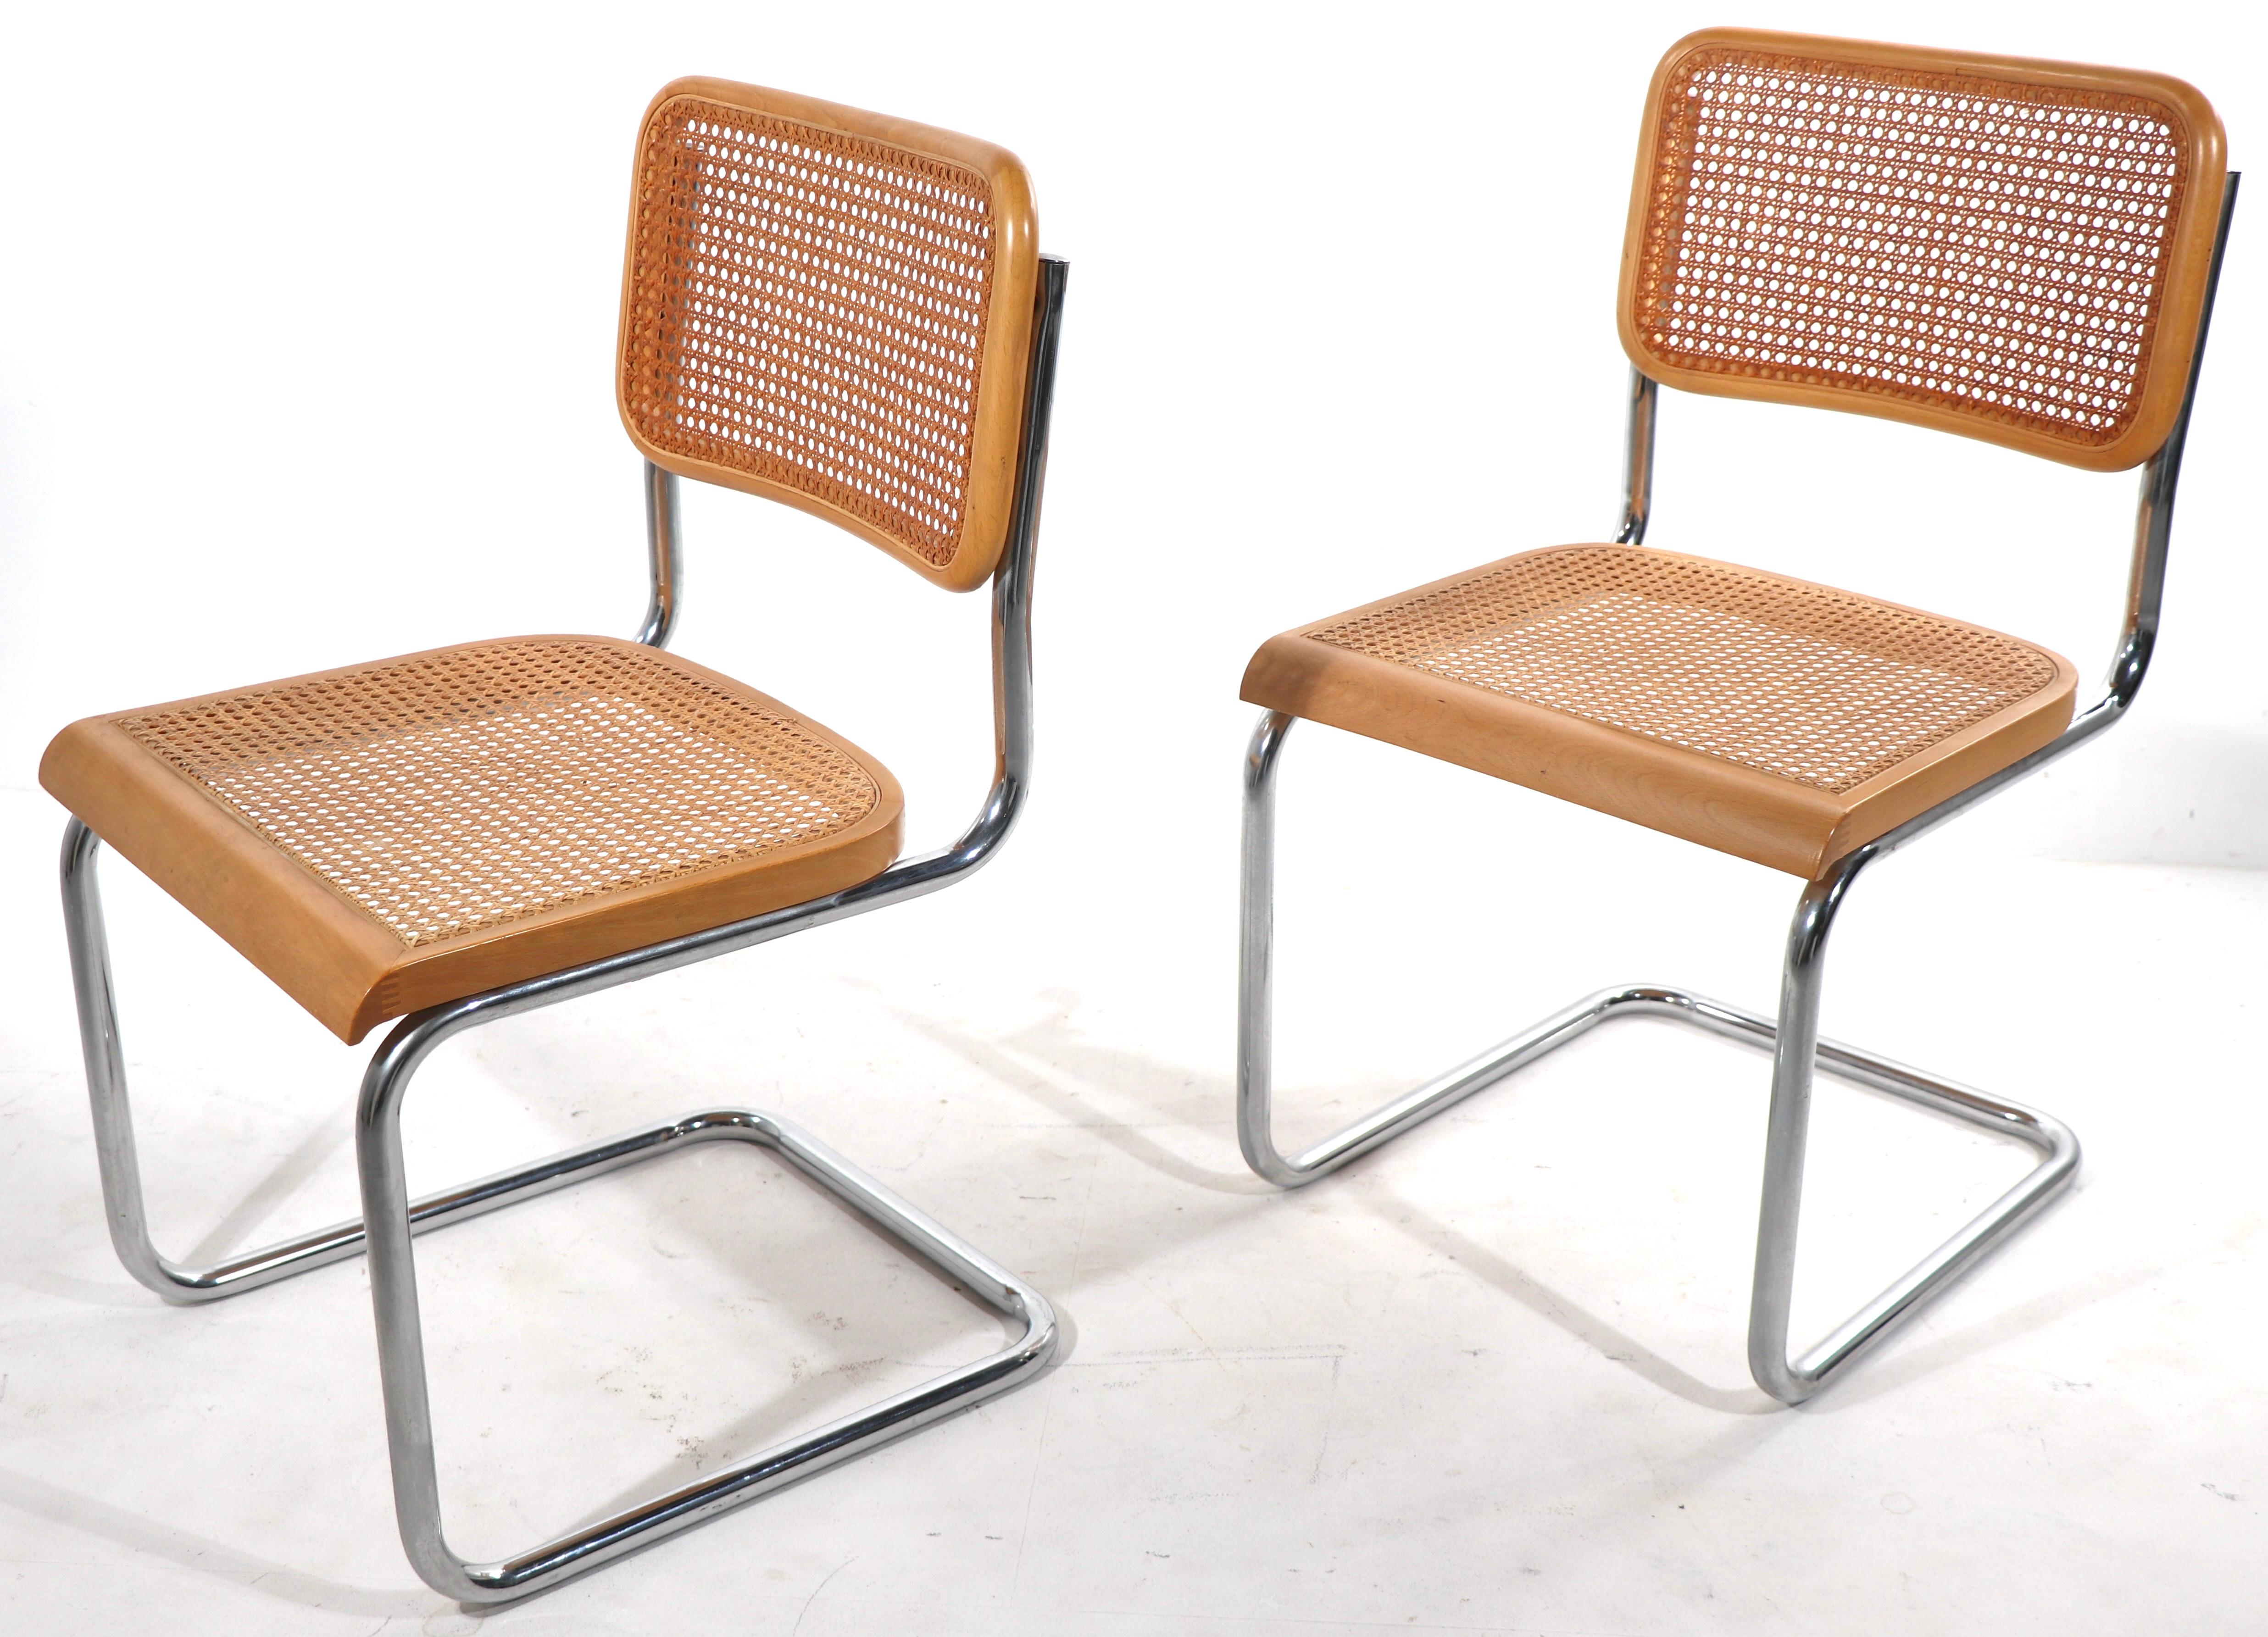 Bauhaus Pr. 1970's Cesca Dining Chairs Designed by Marcel Breuer 